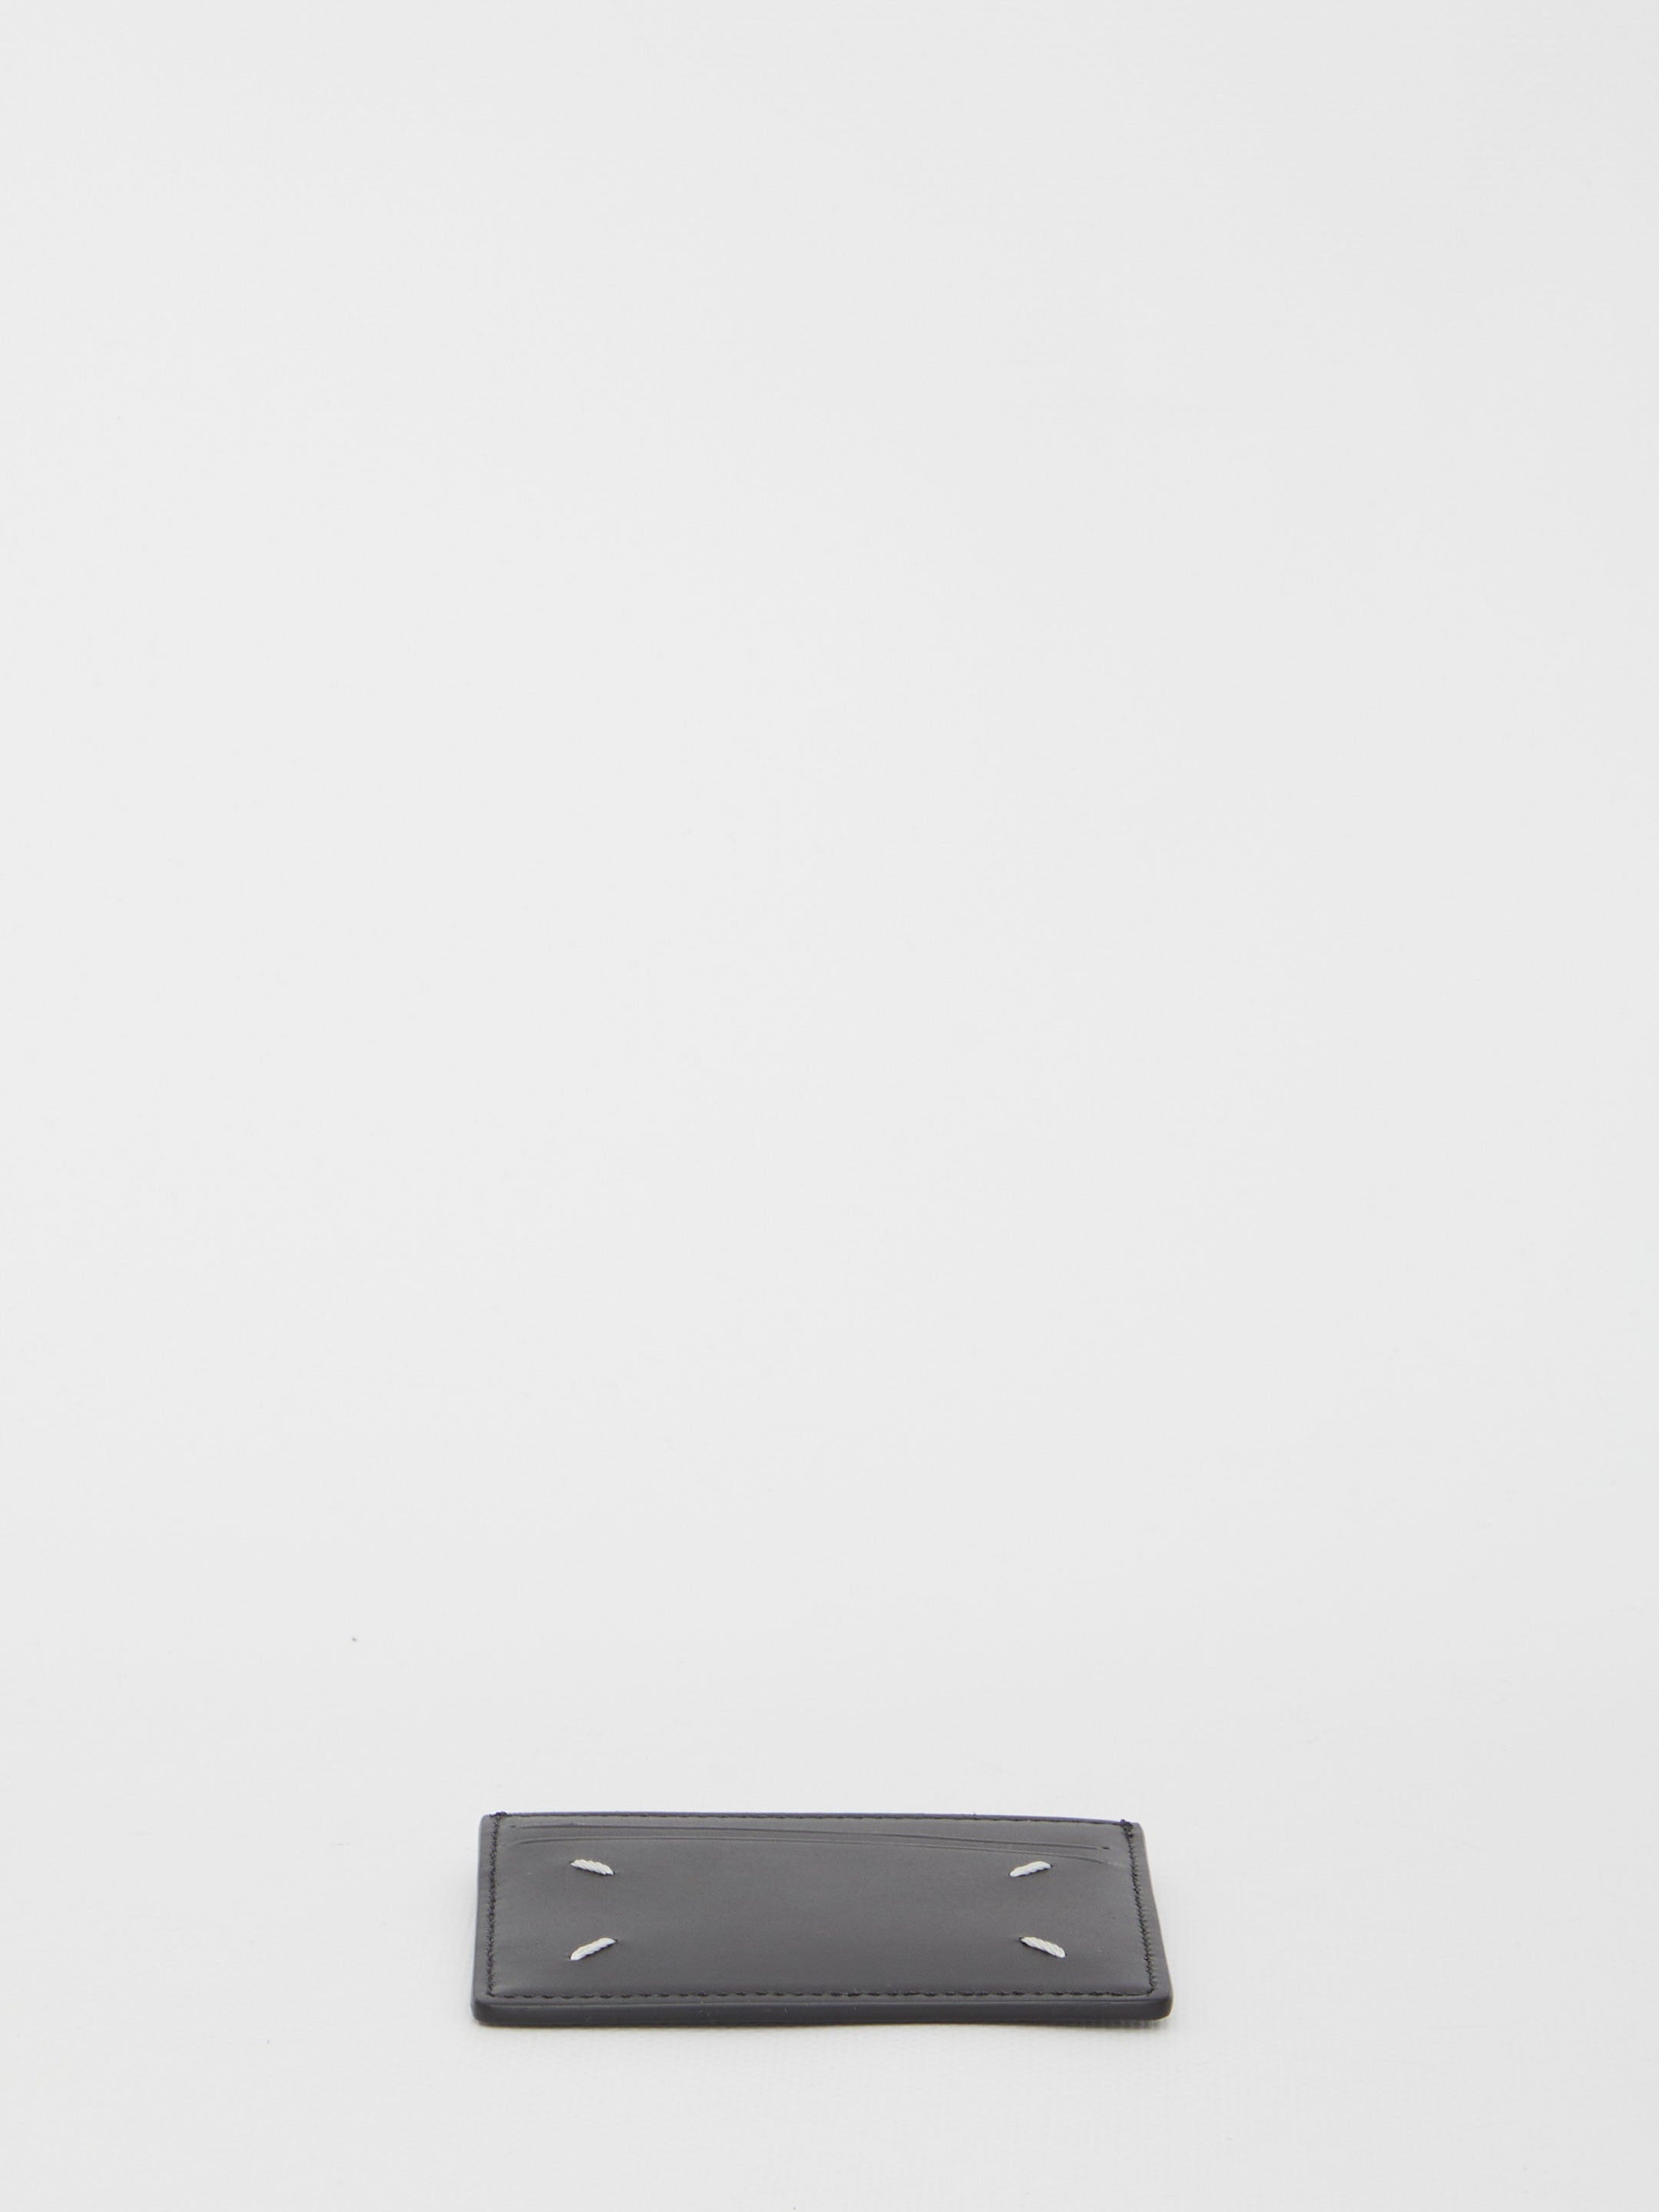 MAISON-MARGIELA-OUTLET-SALE-Black-leather-cardholder-Taschen-QT-BLACK-ARCHIVE-COLLECTION-3.jpg